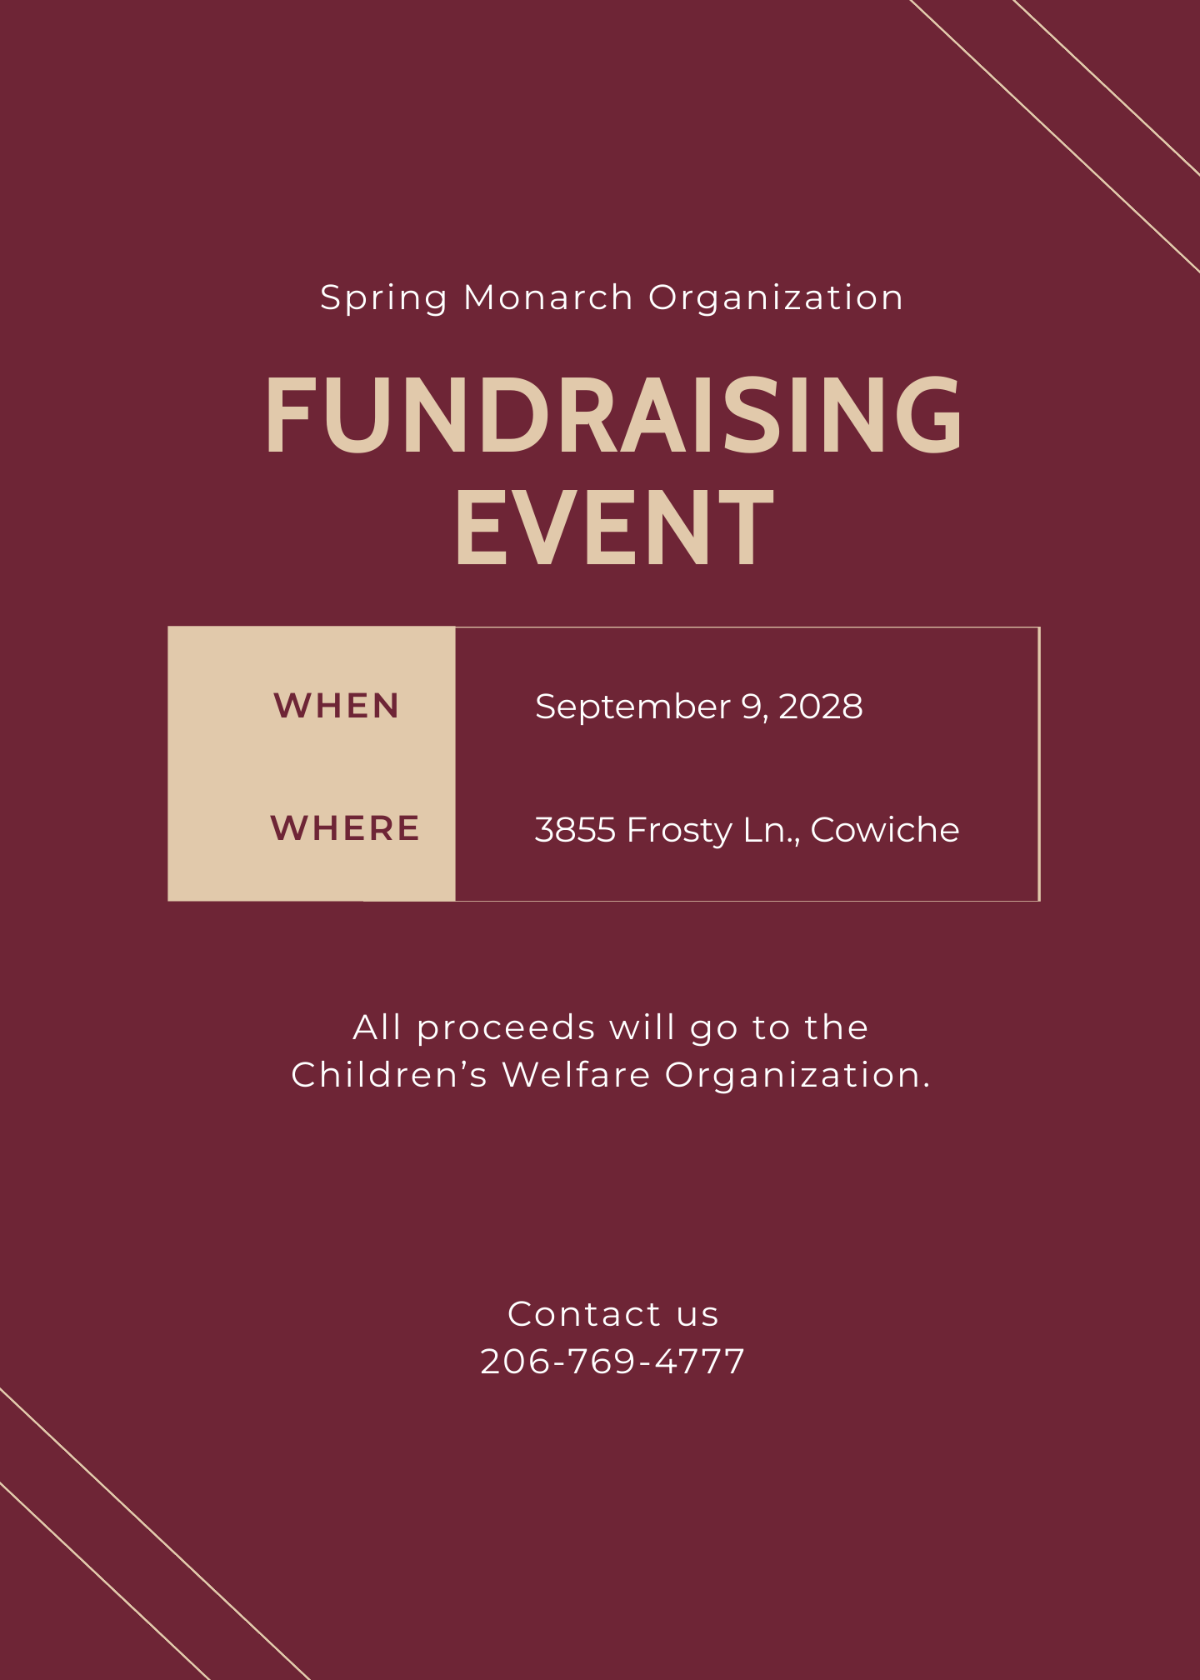 Fundraiser Invitation Template